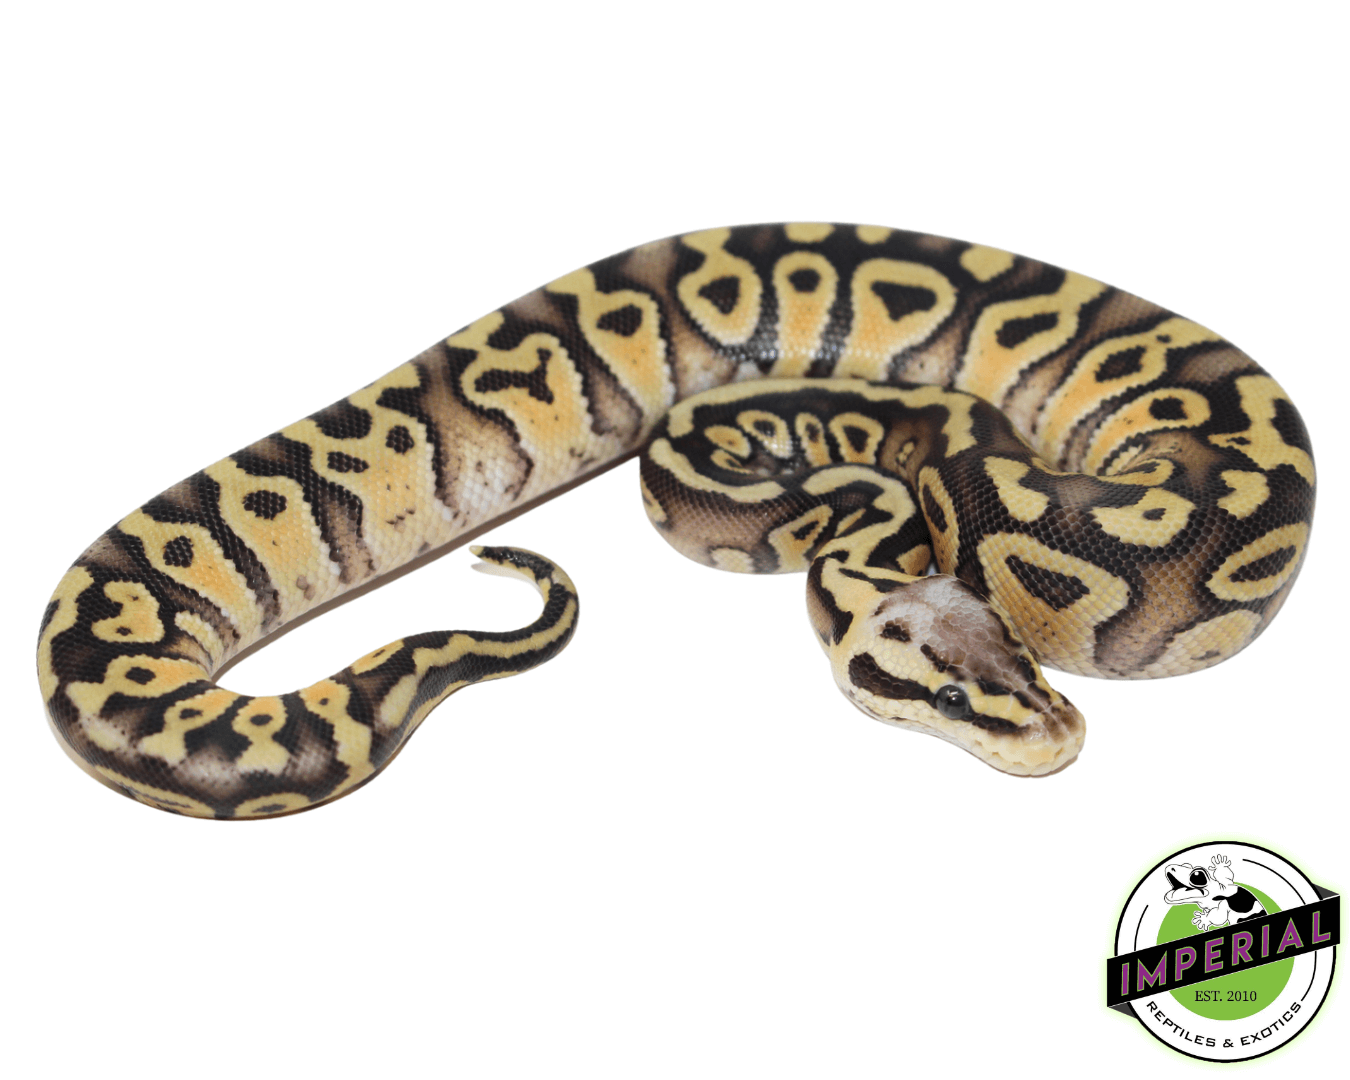 Firefly Gravel ball python for sale, buy reptiles online